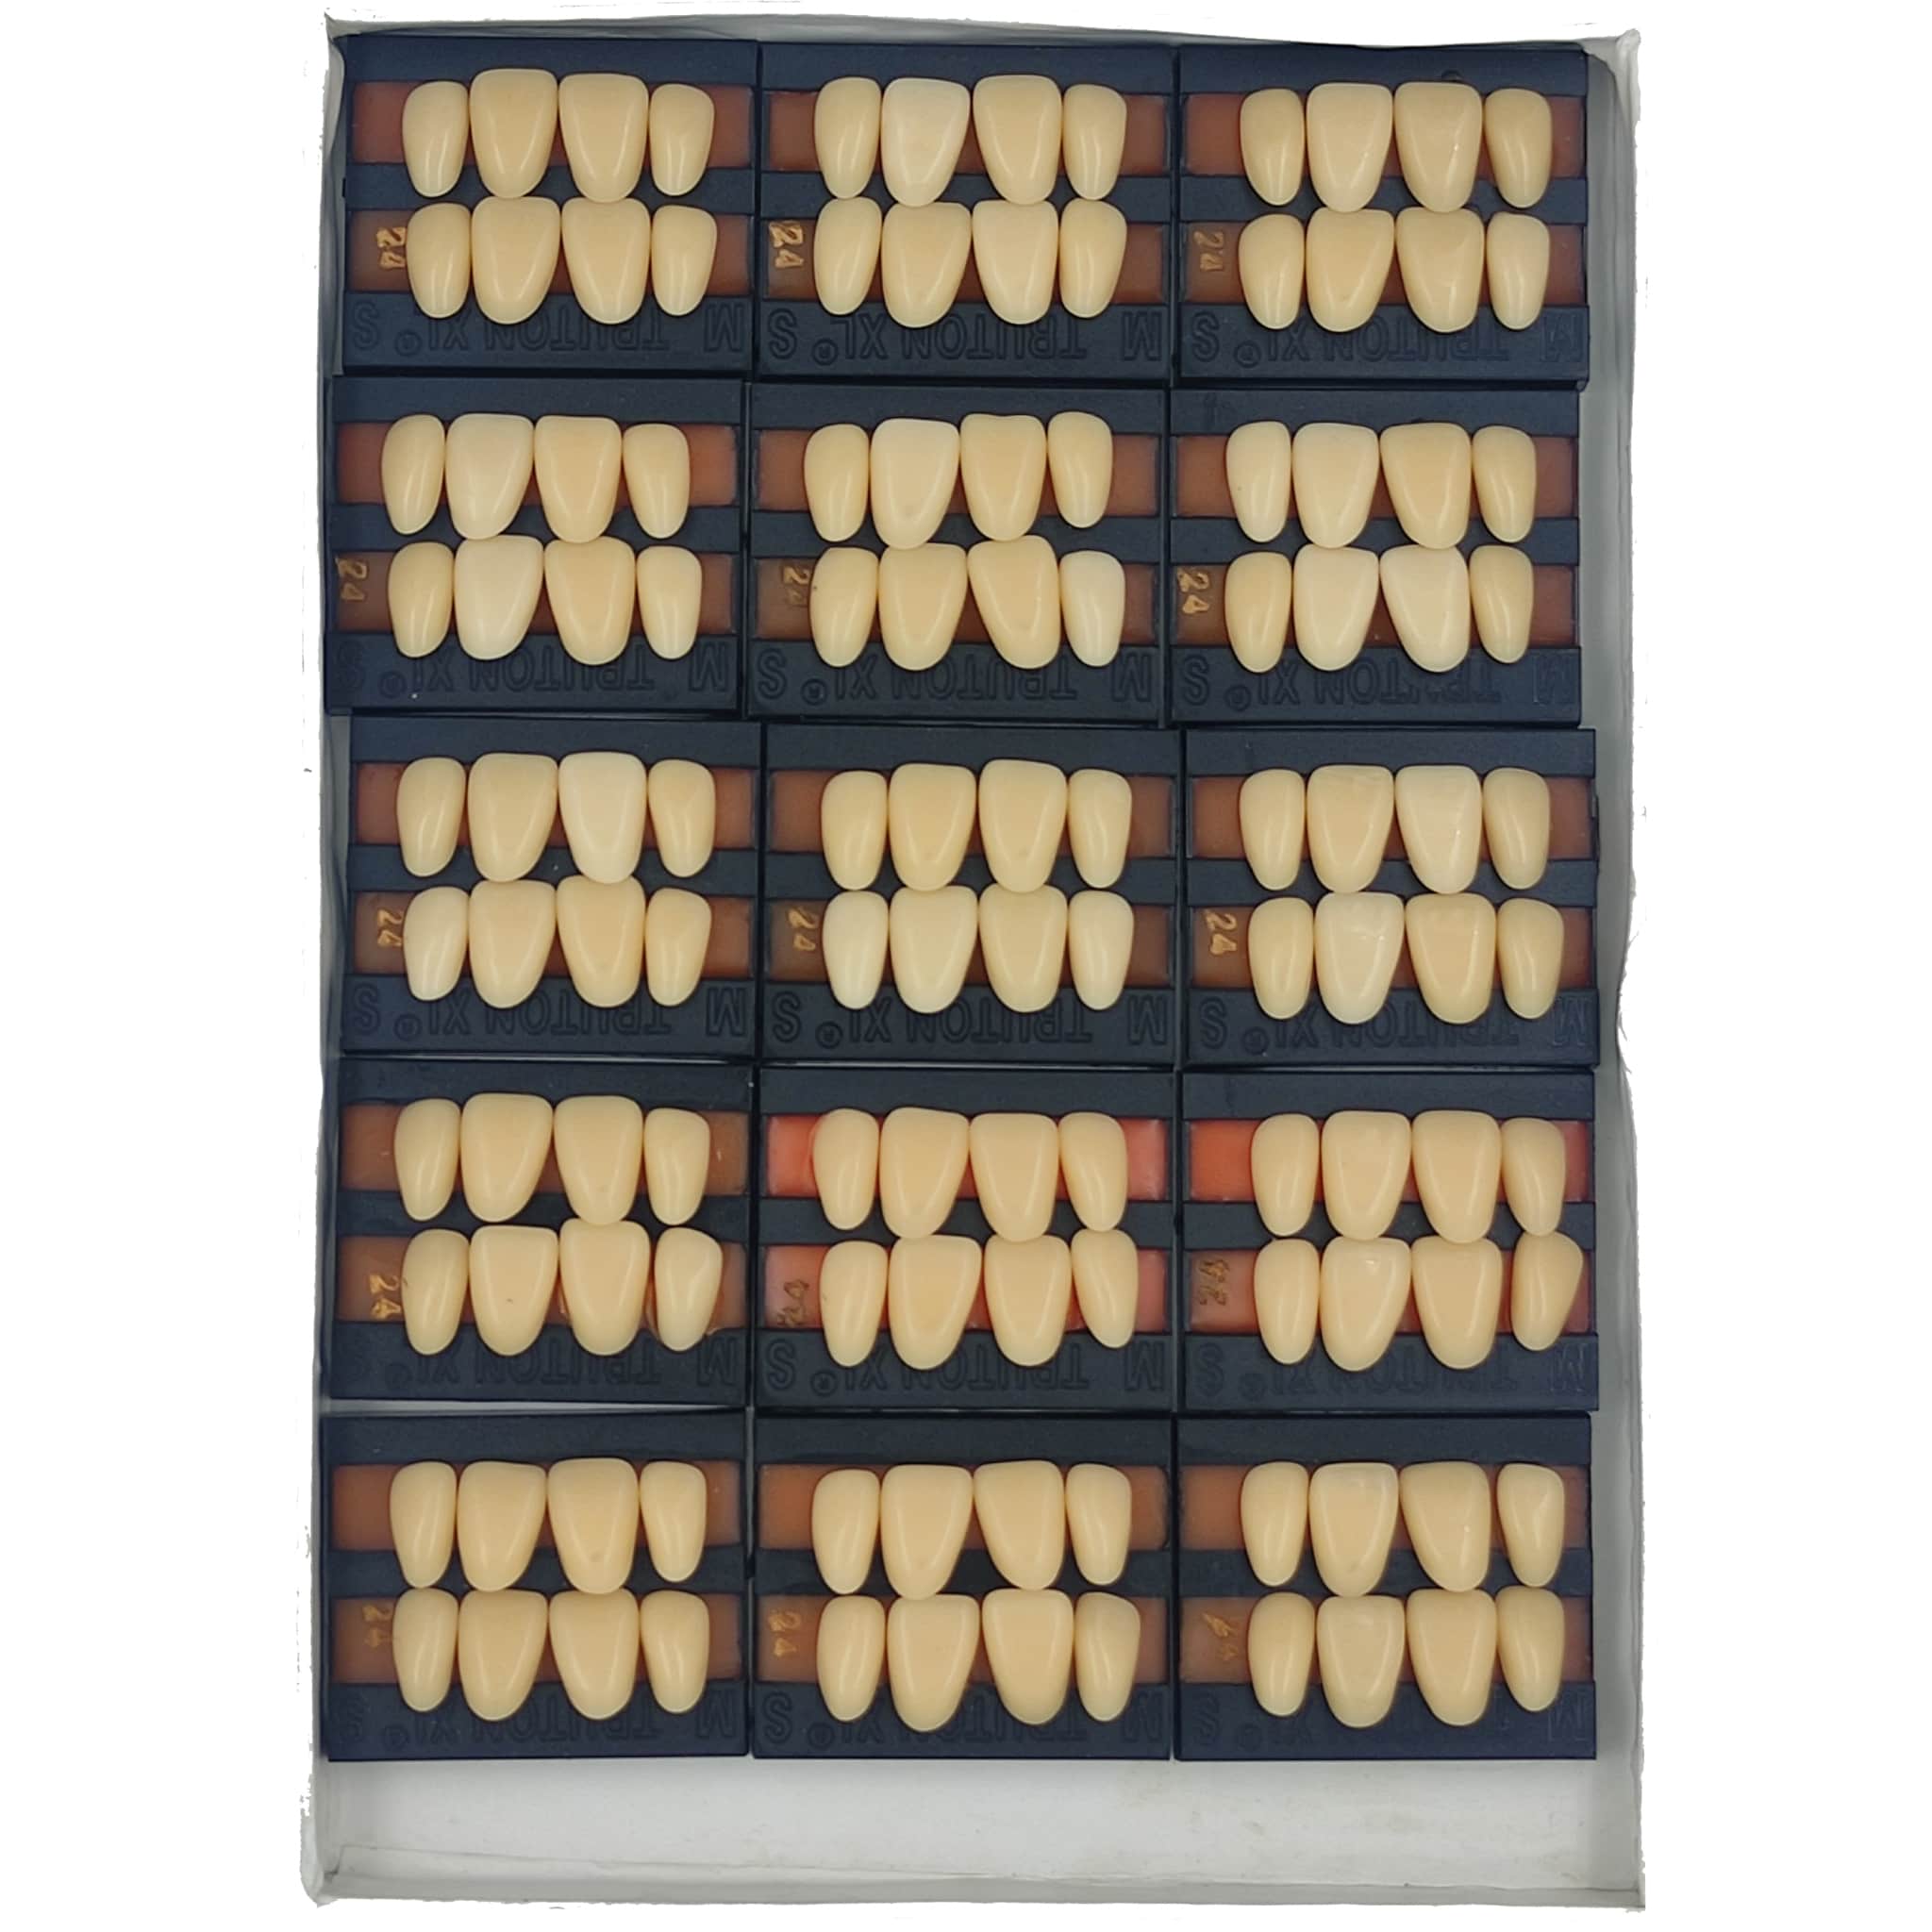 Truton Artificial Teeth Set of 8 Upper (Box of 15)